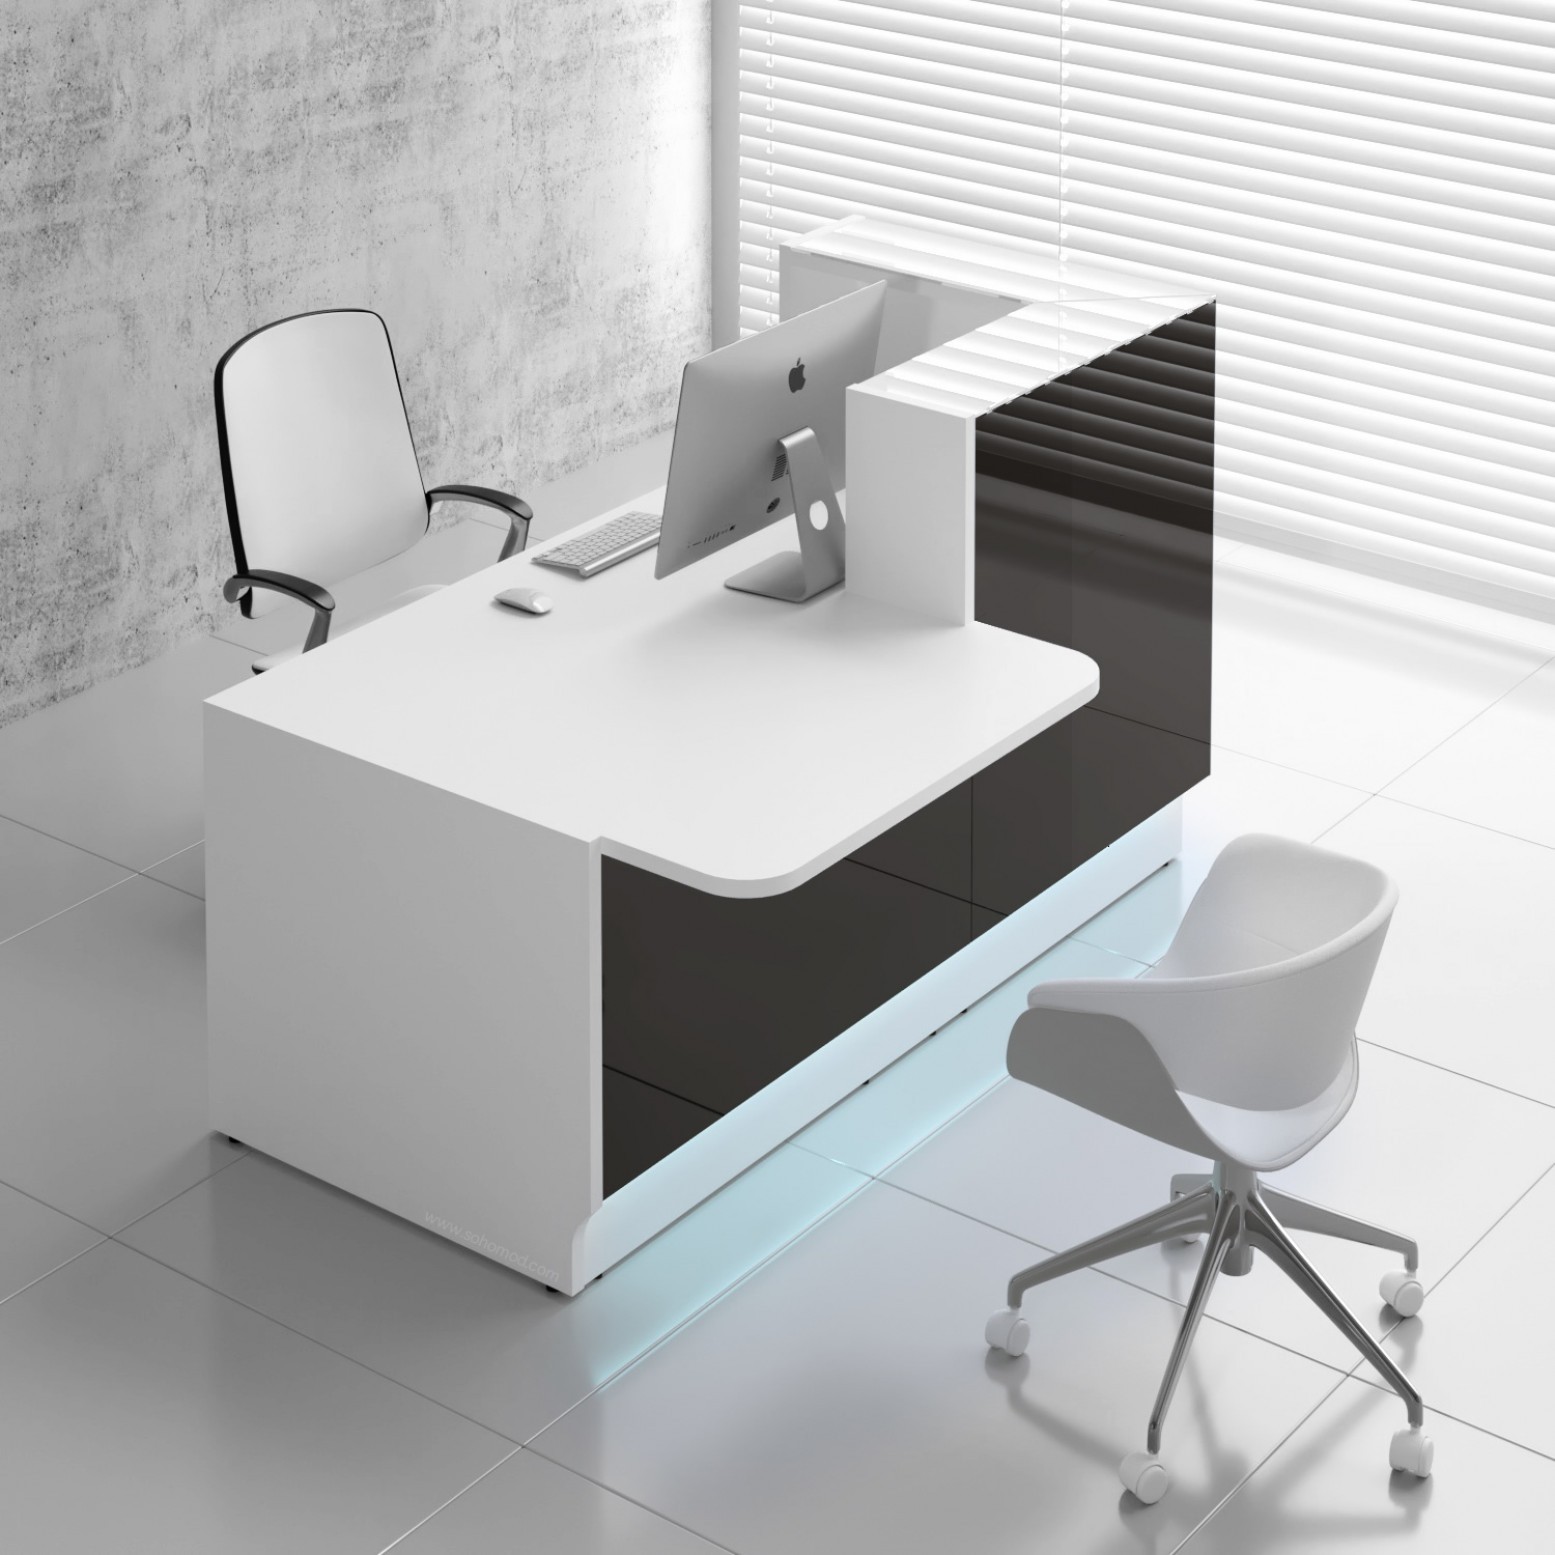 Linea lin29p reception desk black buy online at best price